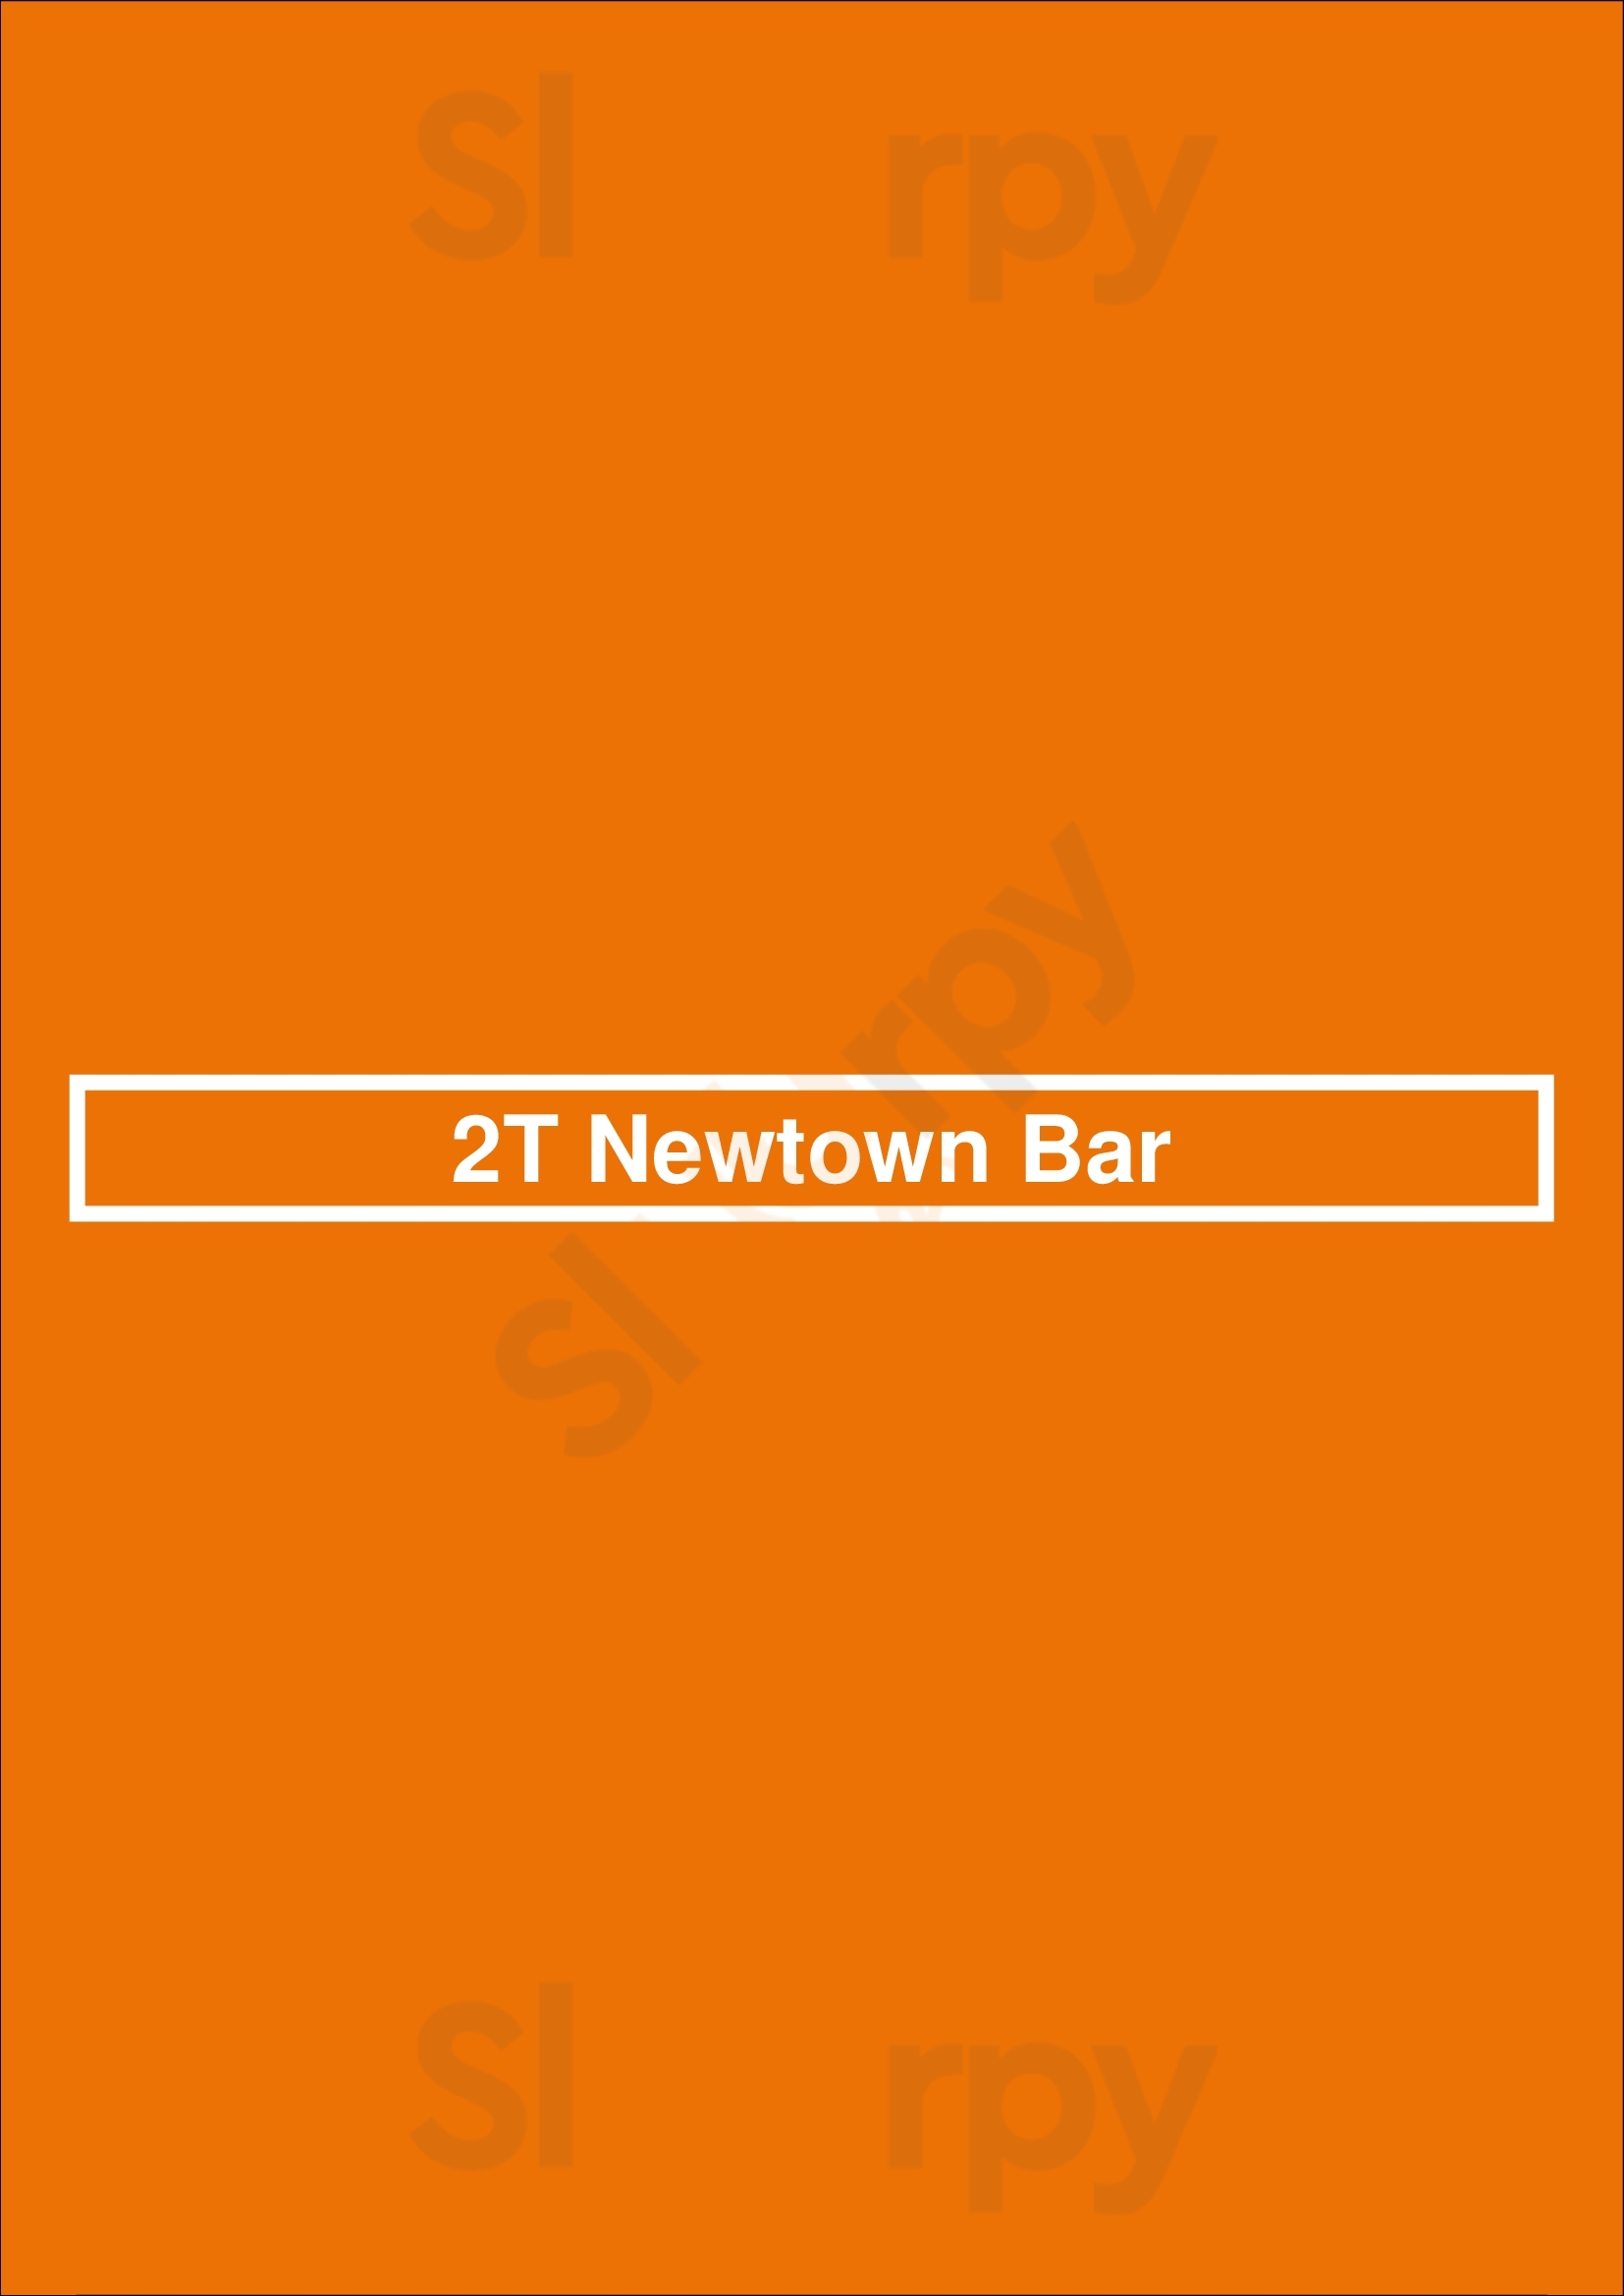 2t Newtown Bar Newtown Menu - 1